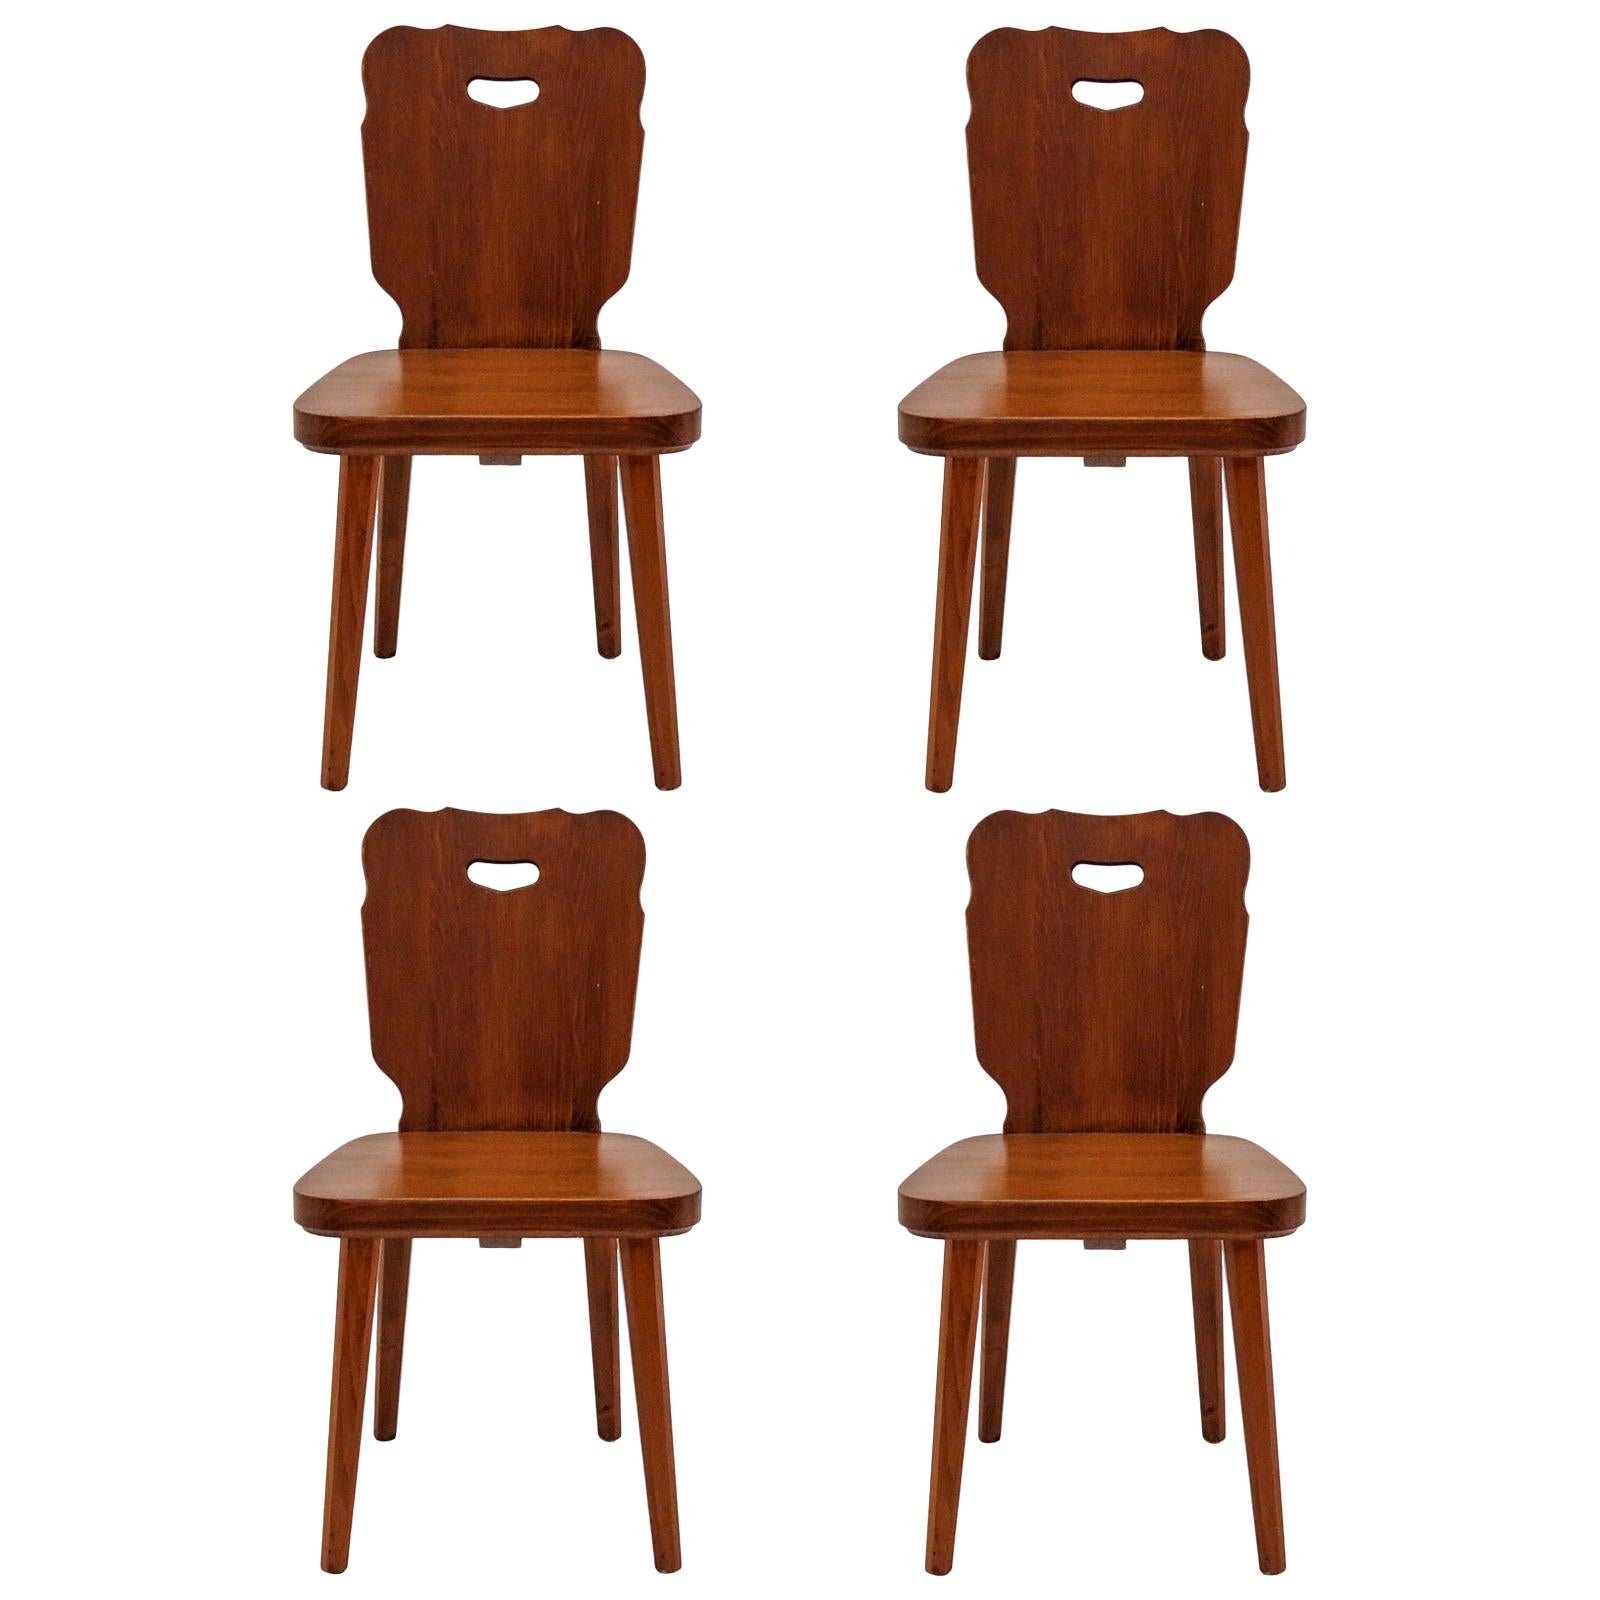 Set of Four Swedish Pine Chairs, 1890